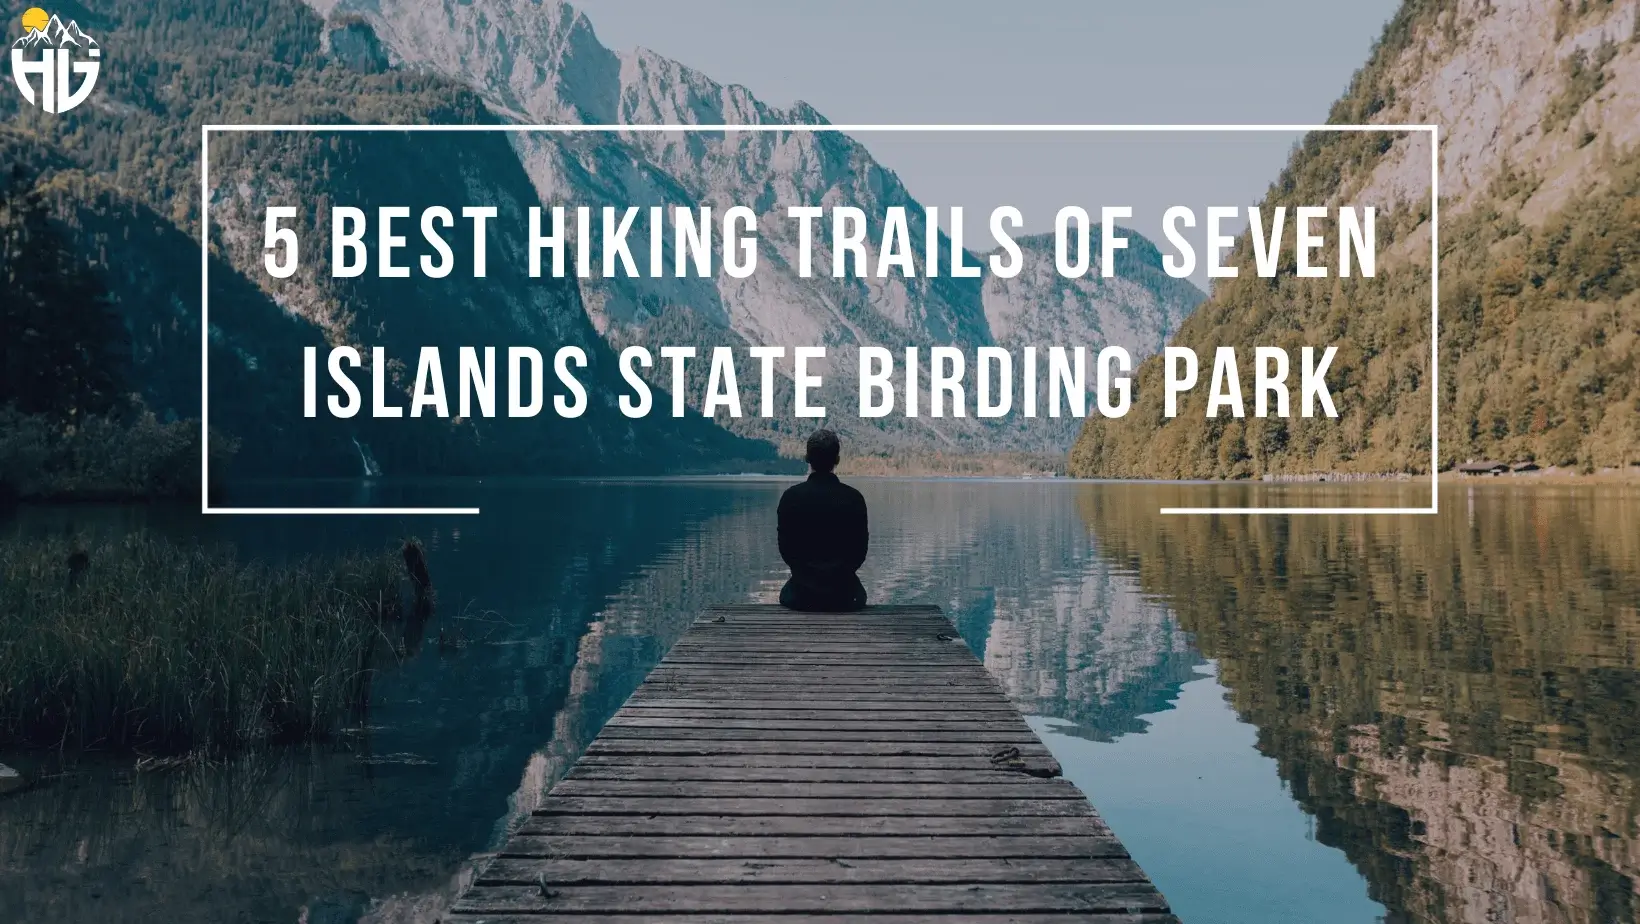 5 Best Hiking Trails of Seven Islands State Birding Park